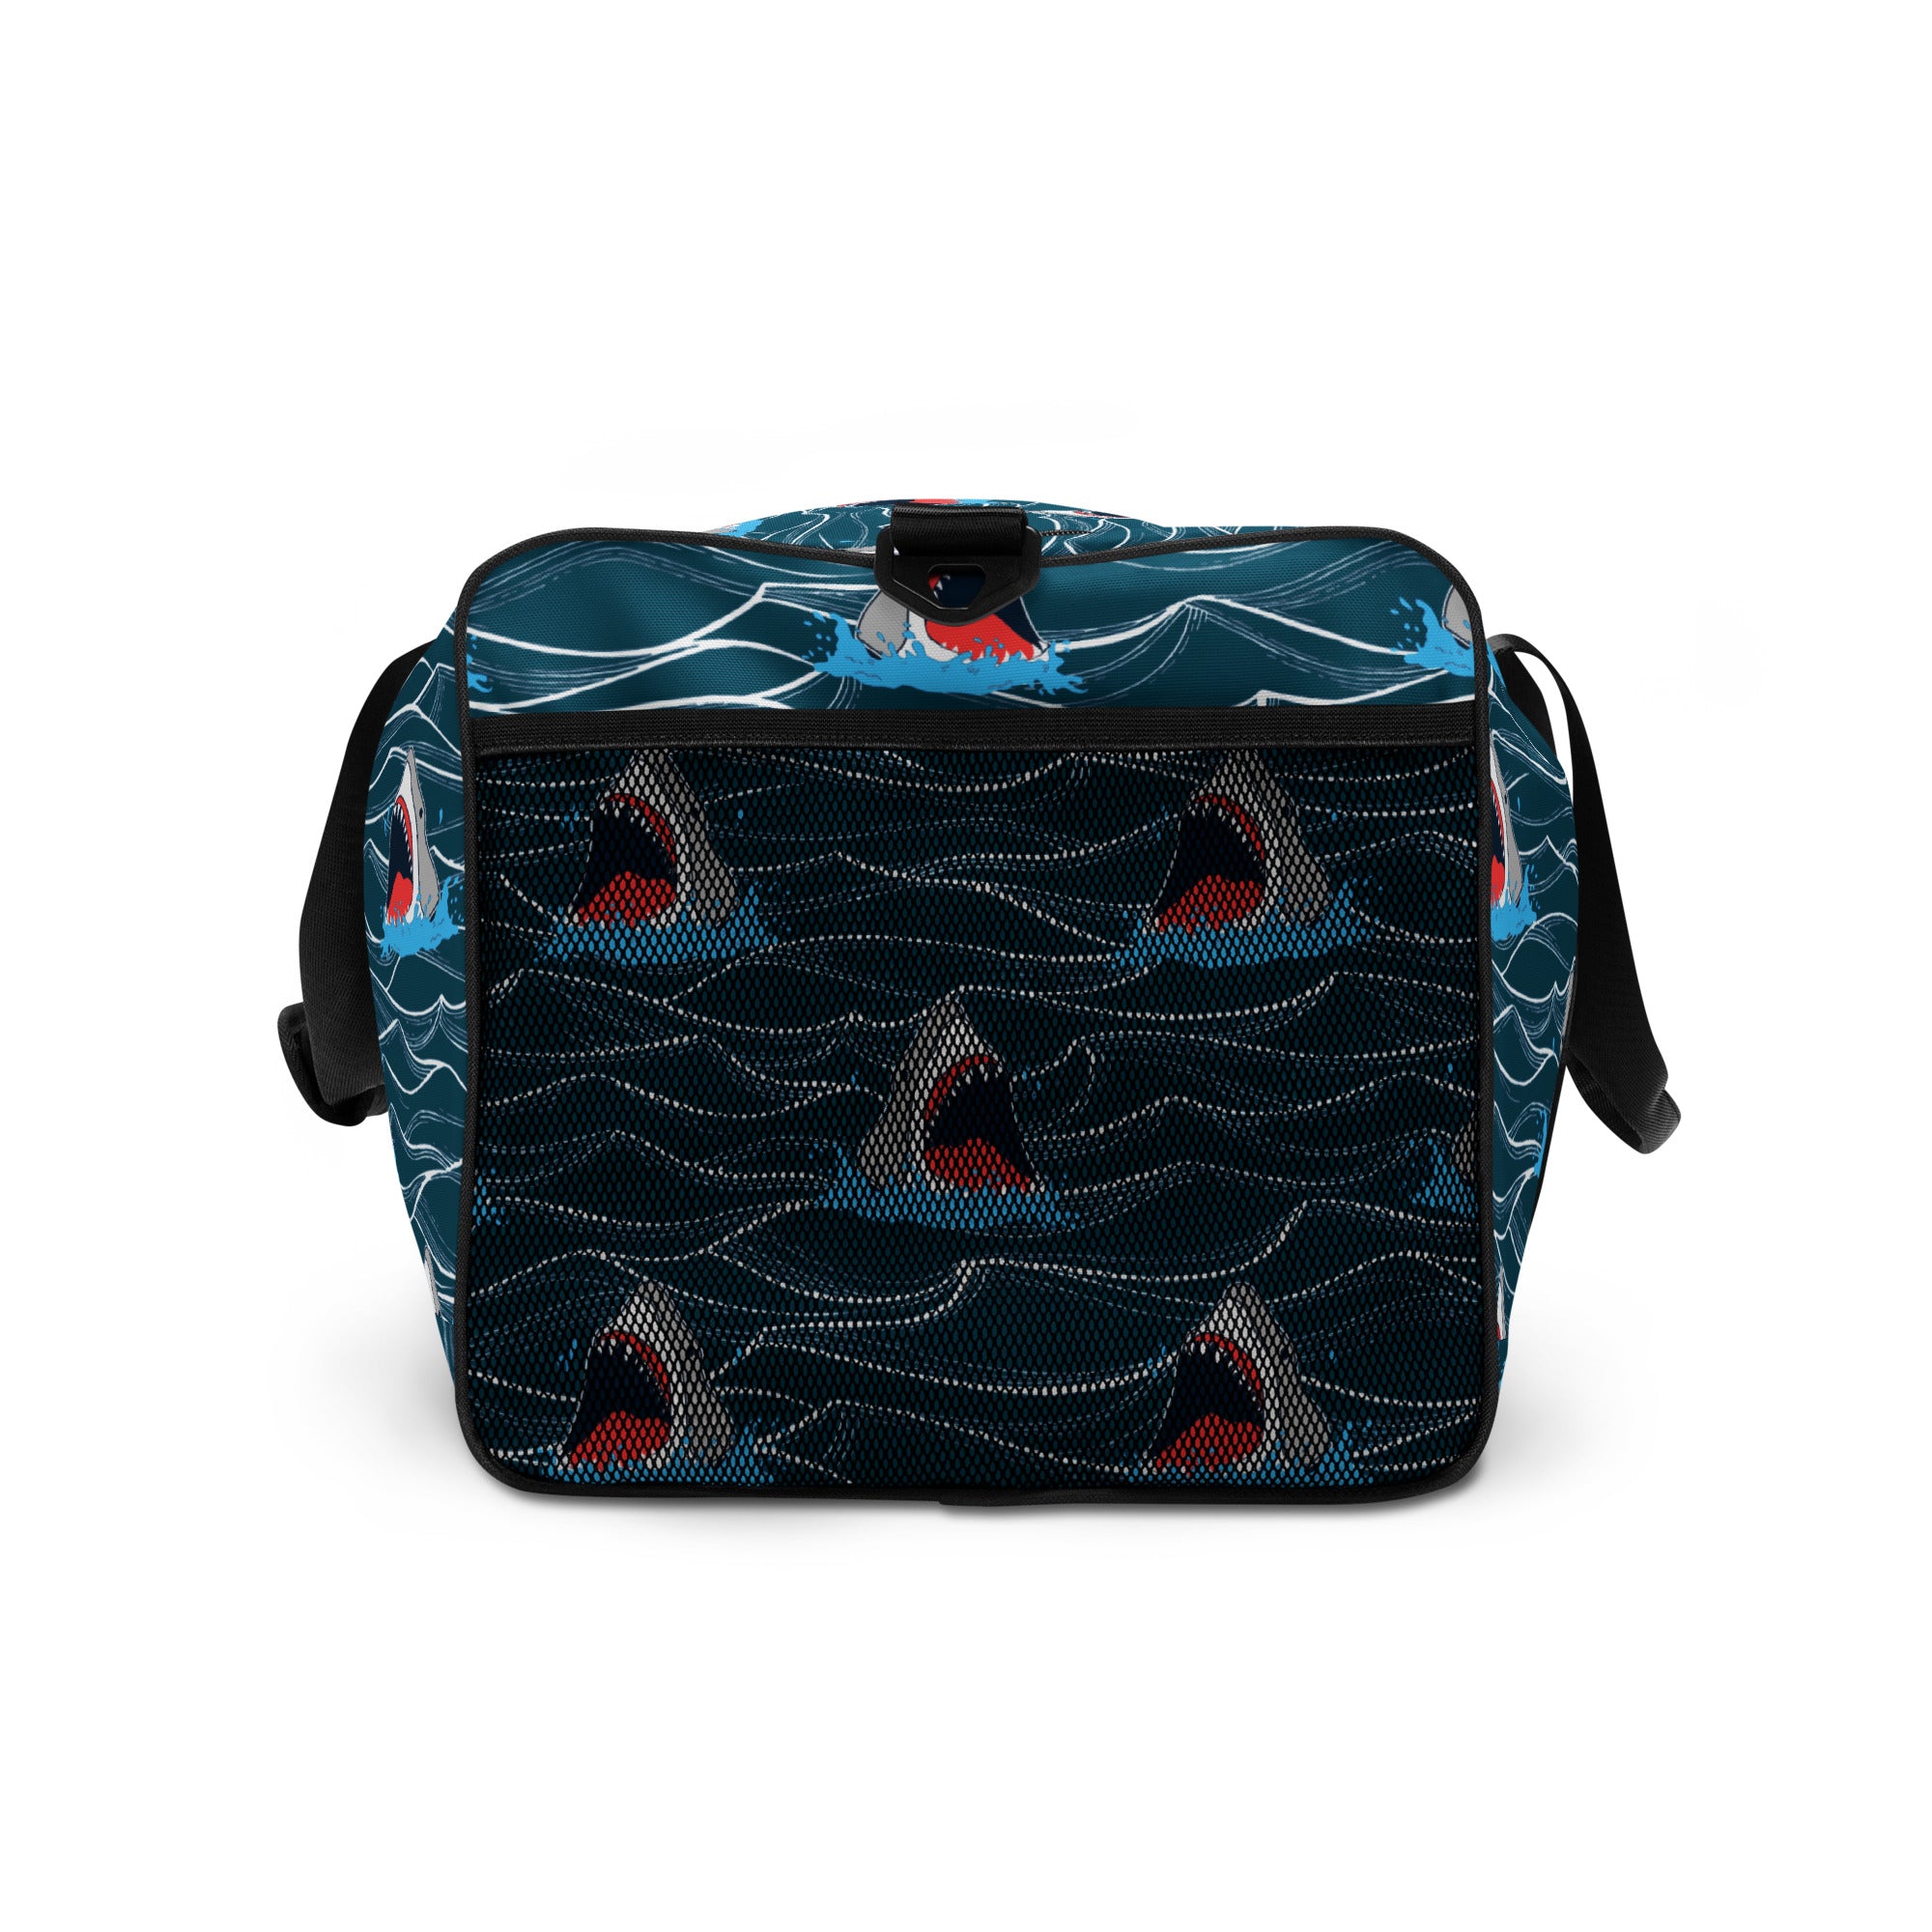 Shark Bait 2 Duffle Bag